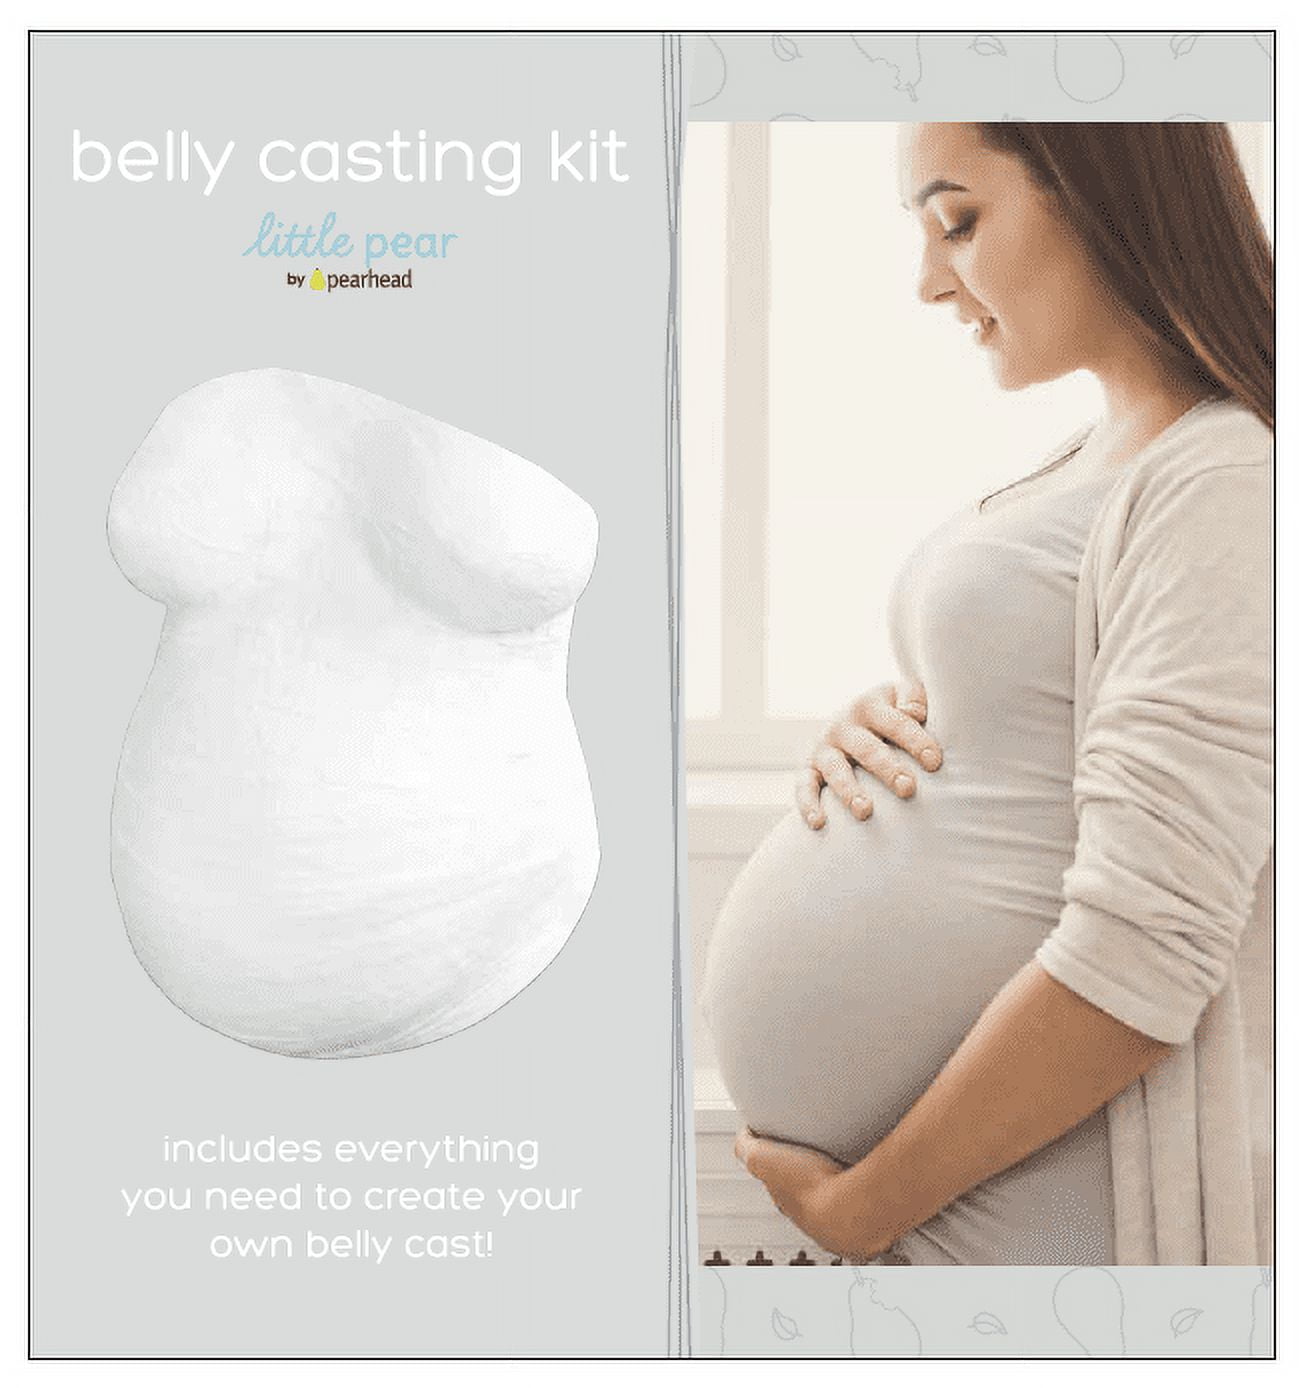 PDTO Belly Casting Kit Pregnancy Keepsake for Expecting Mothers